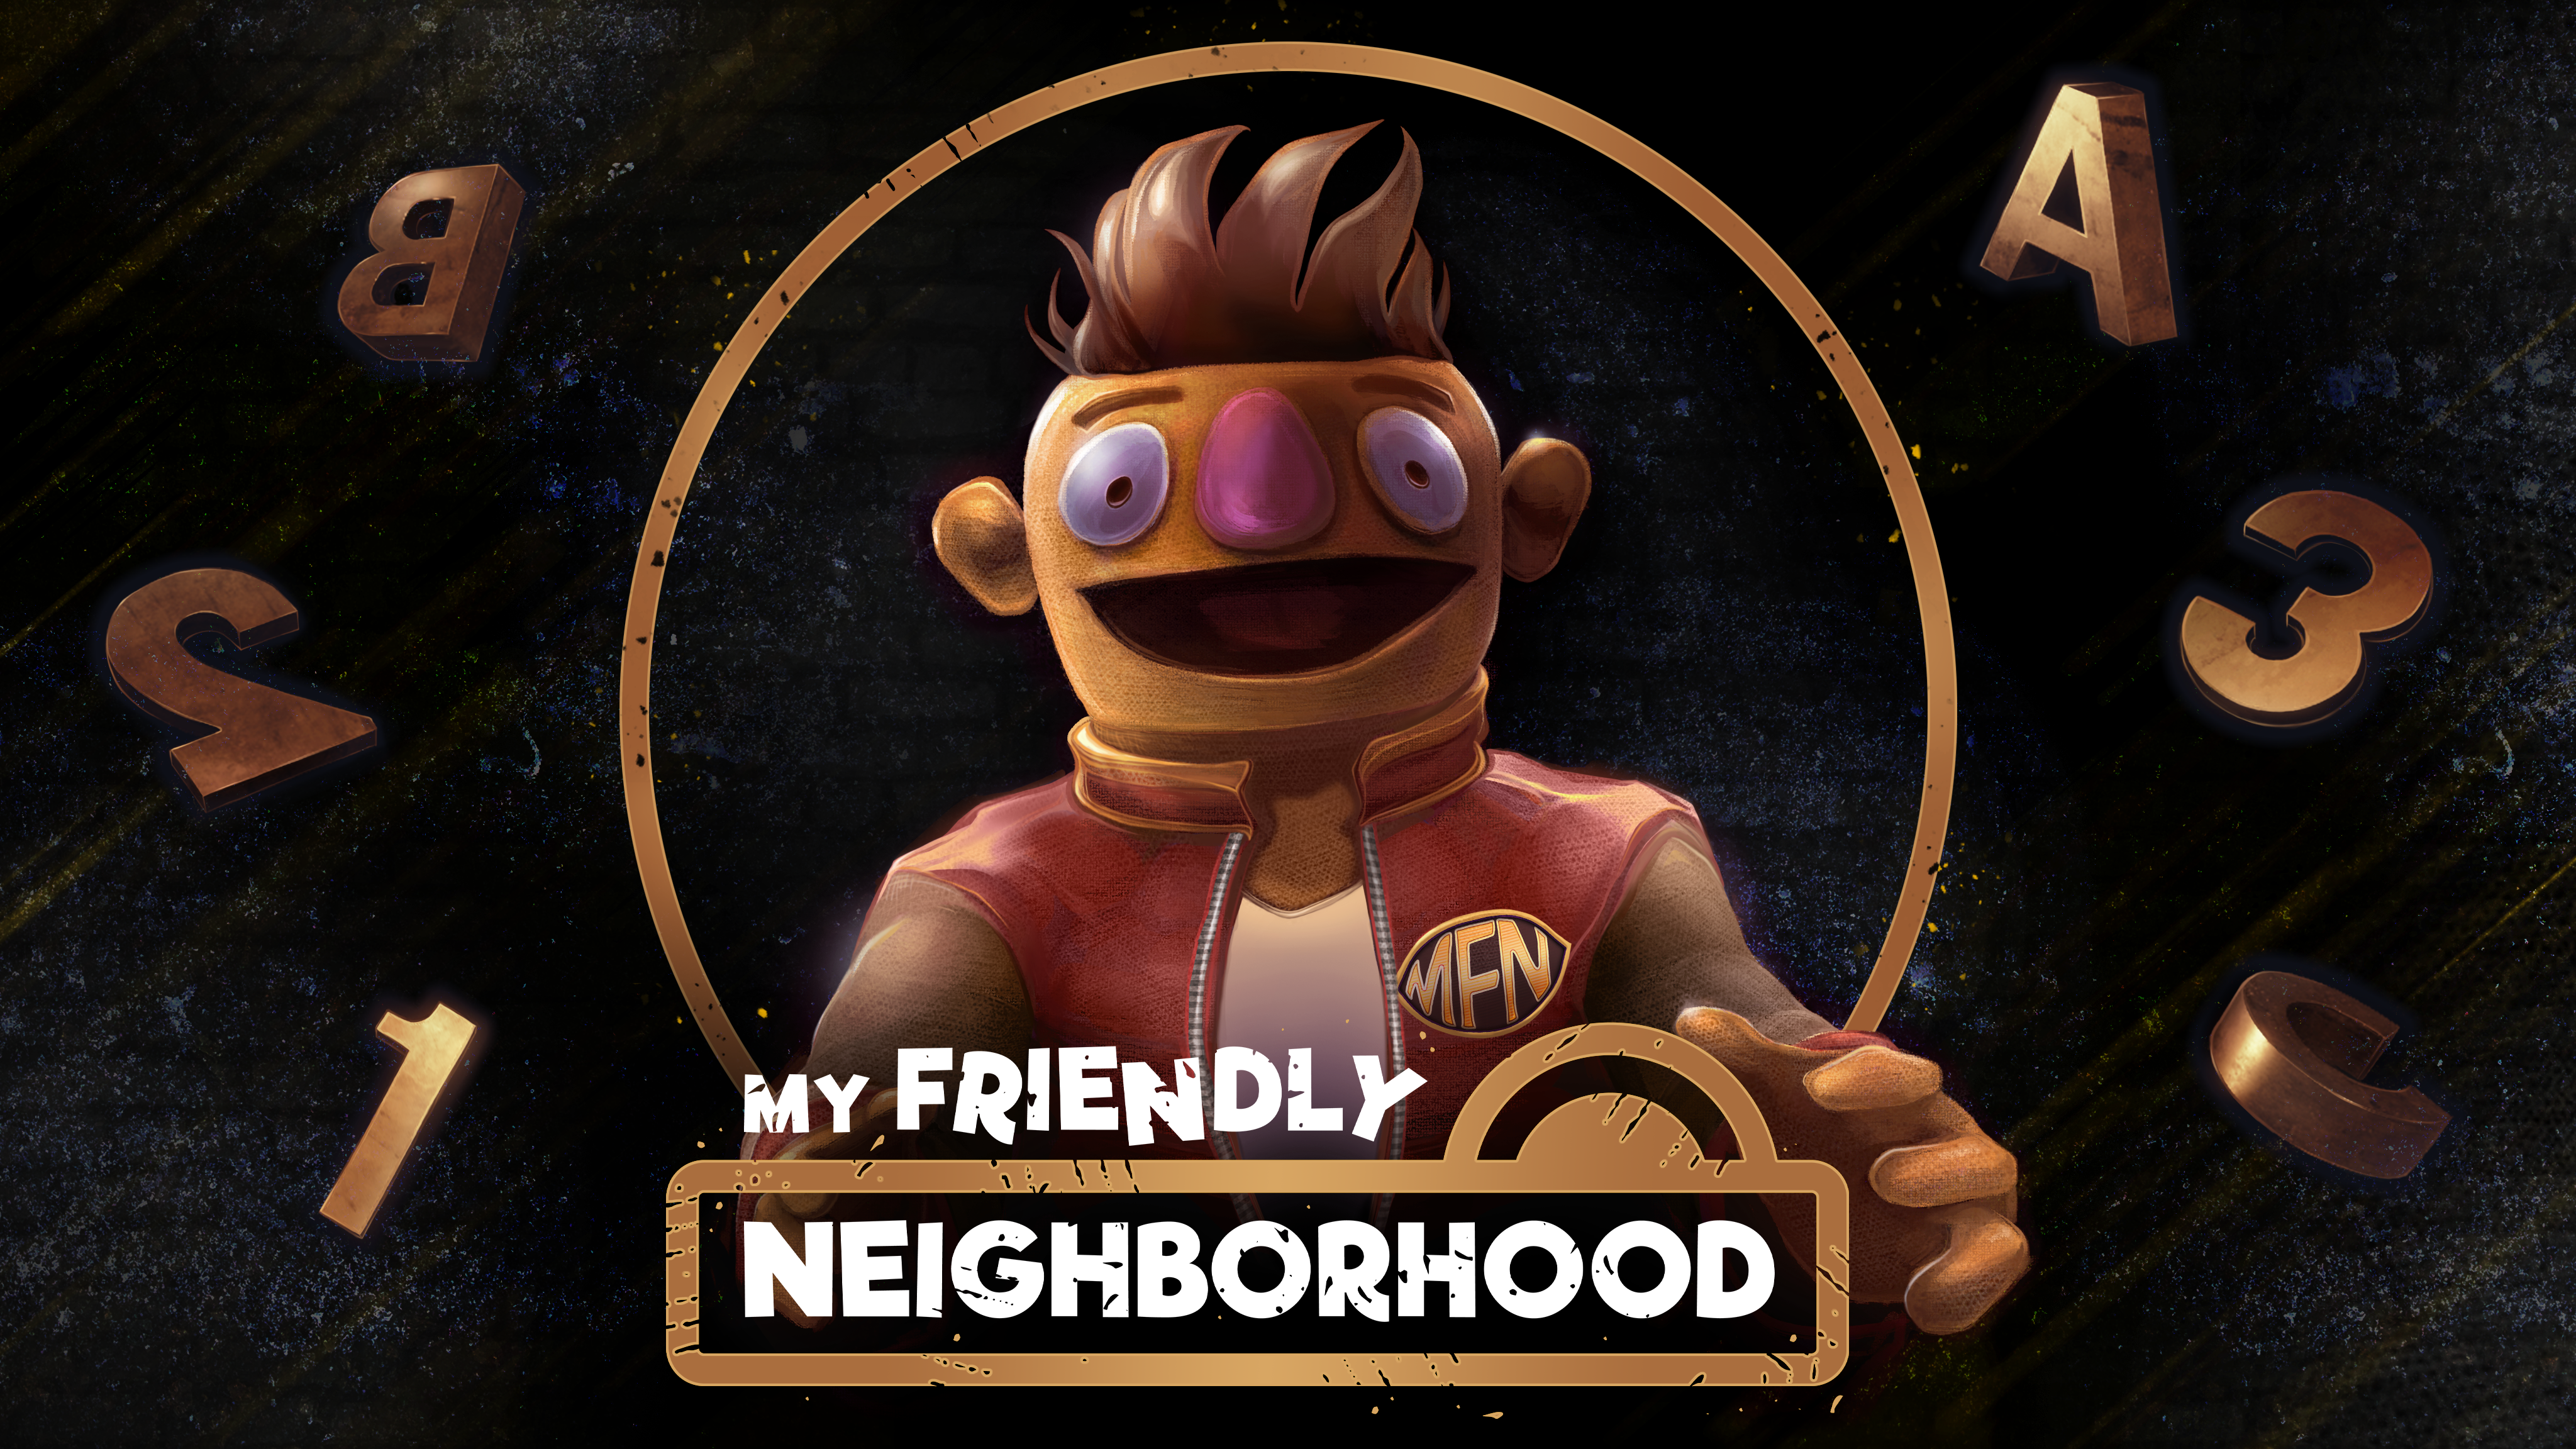 O my games. My friendly neighborhood игра. My friendly neighborhood логотип. Май френдли нейборхуд. My friendly neighborhood оружие.